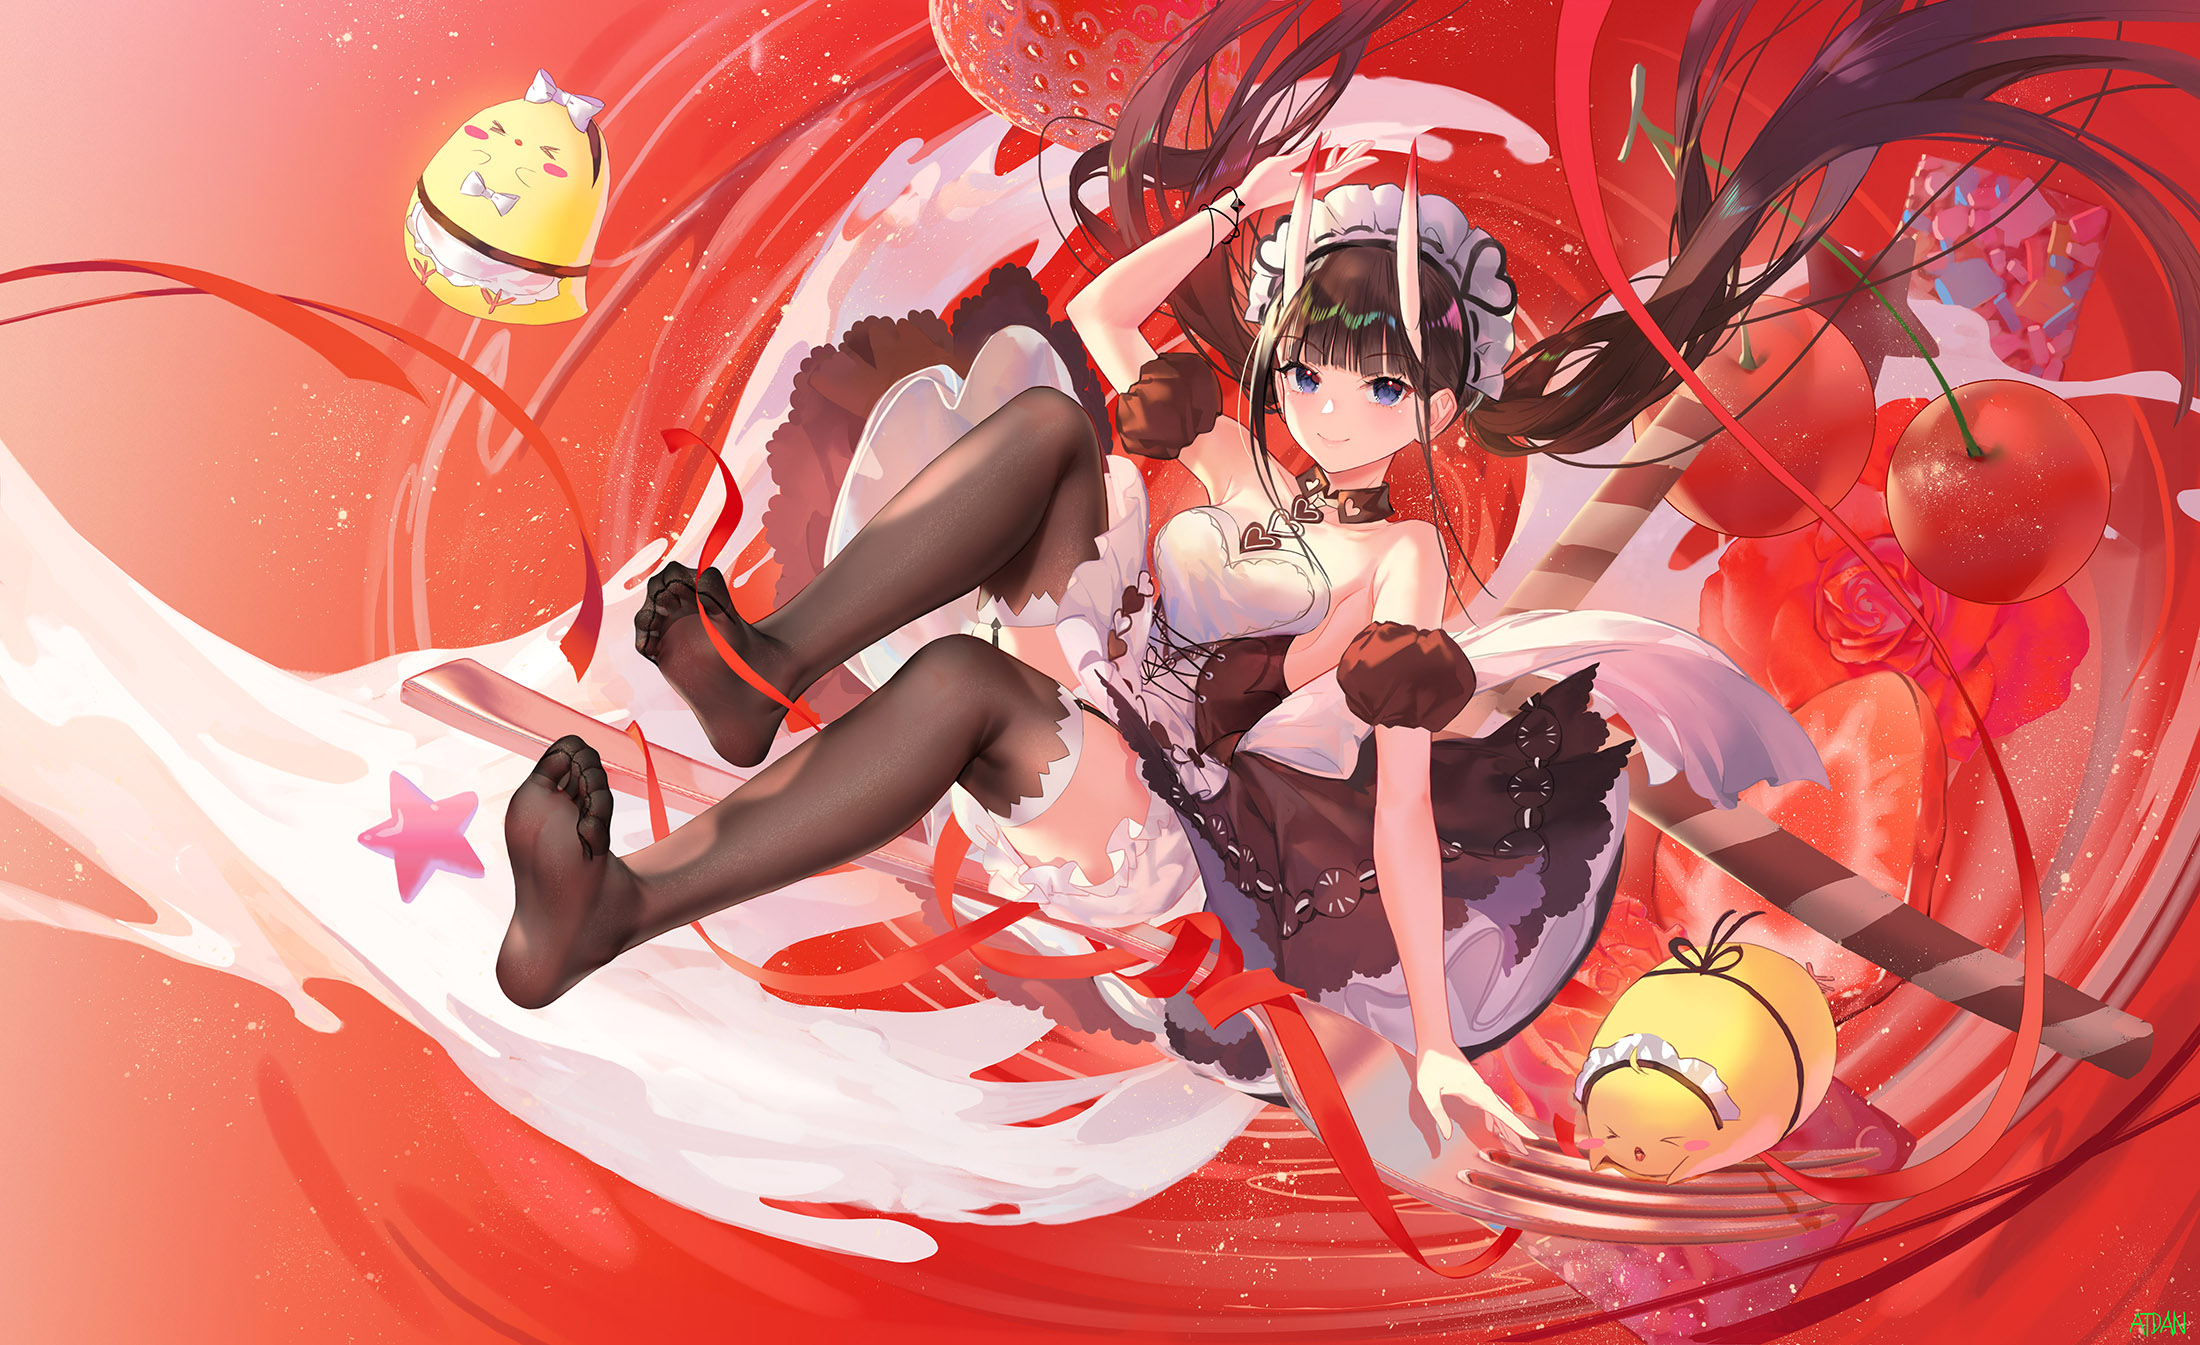 Anime 2200x1345 Atdan anime girls horns maid maid outfit stockings cherries strawberries fruit fork Noshiro (Azur Lane) Azur Lane